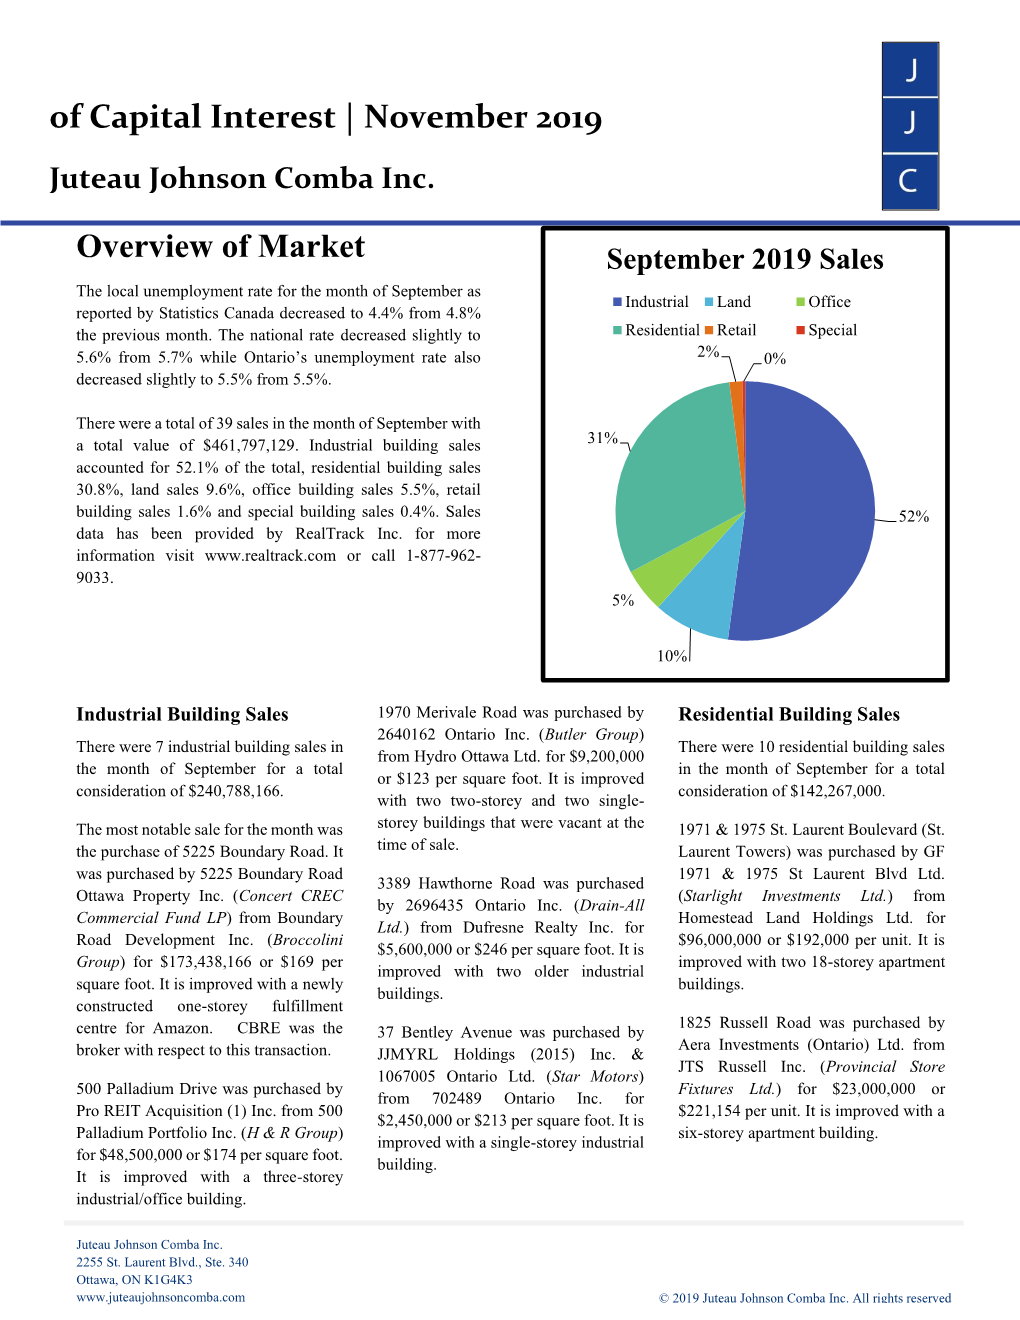 Of Capital Interest | November 2019 Juteau Johnson Comba Inc